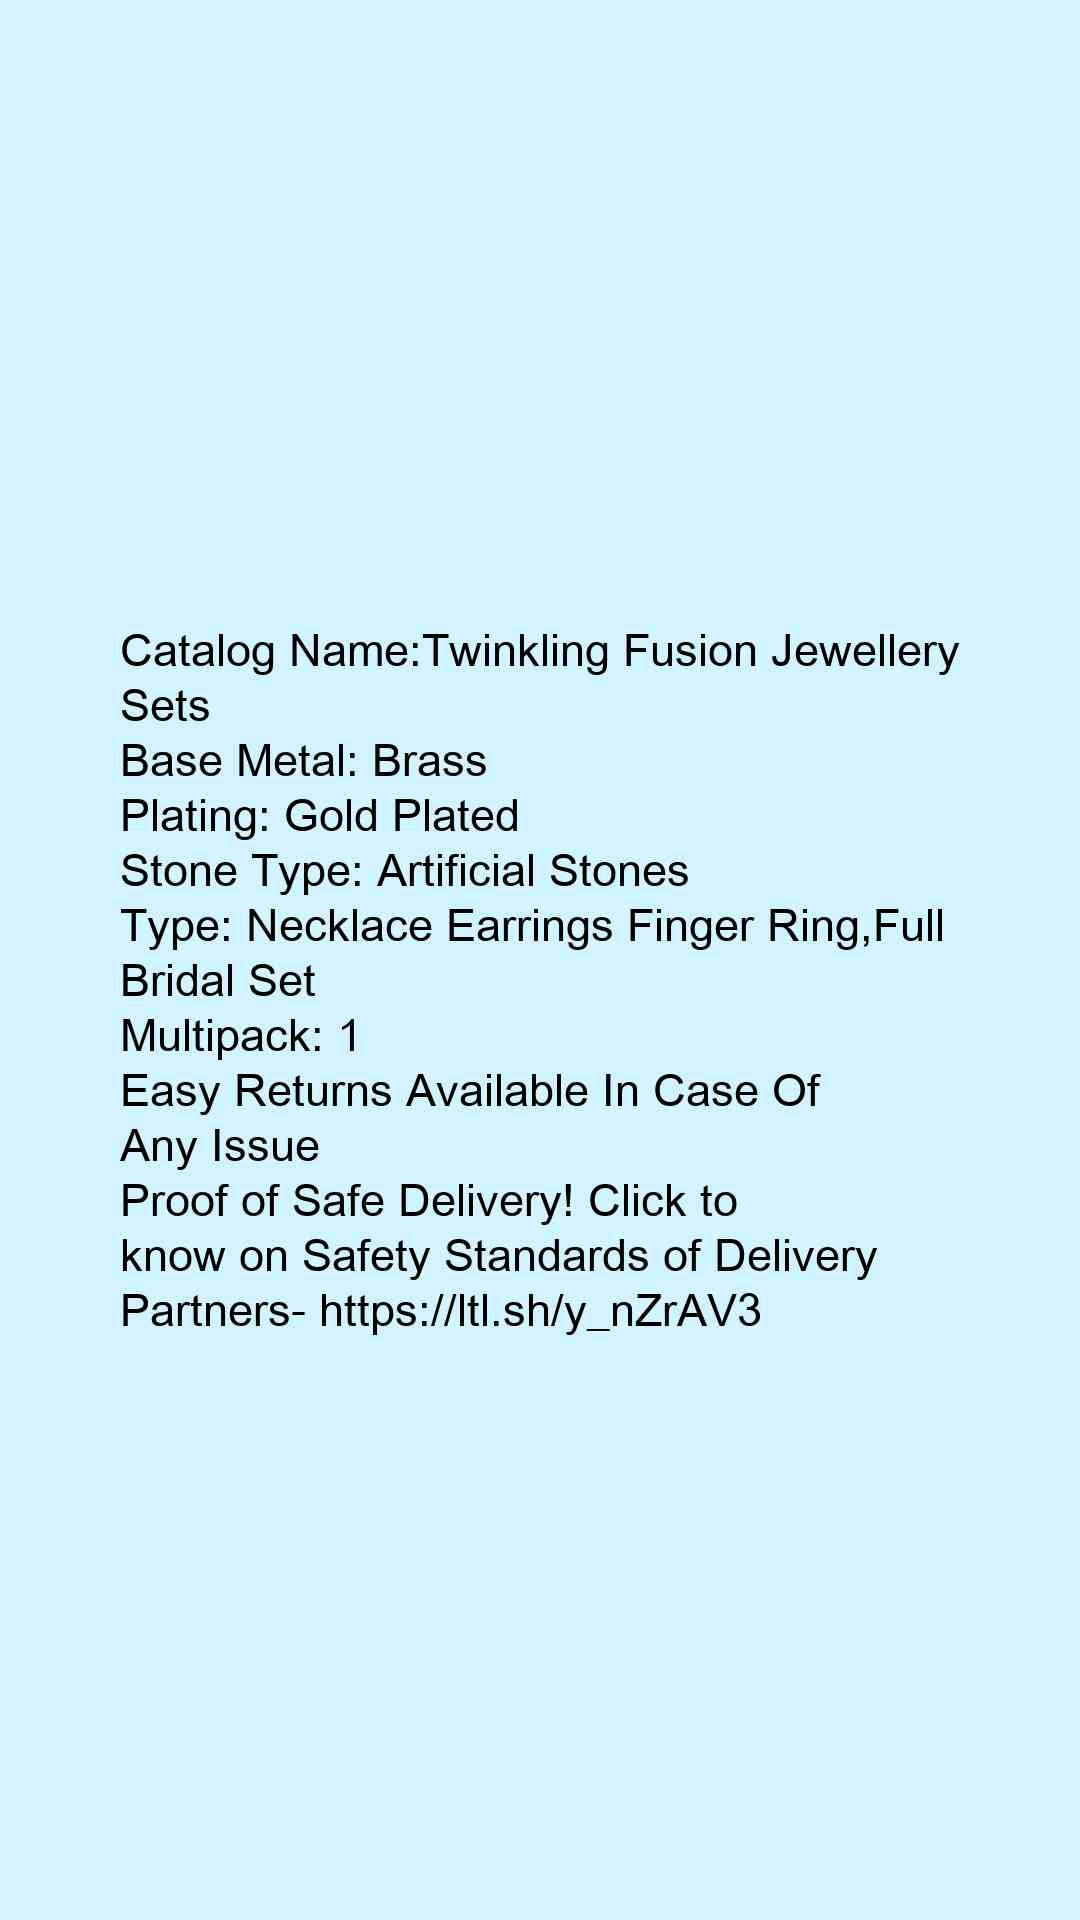 Twinkling Fusion Jewellery Sets - Faritha